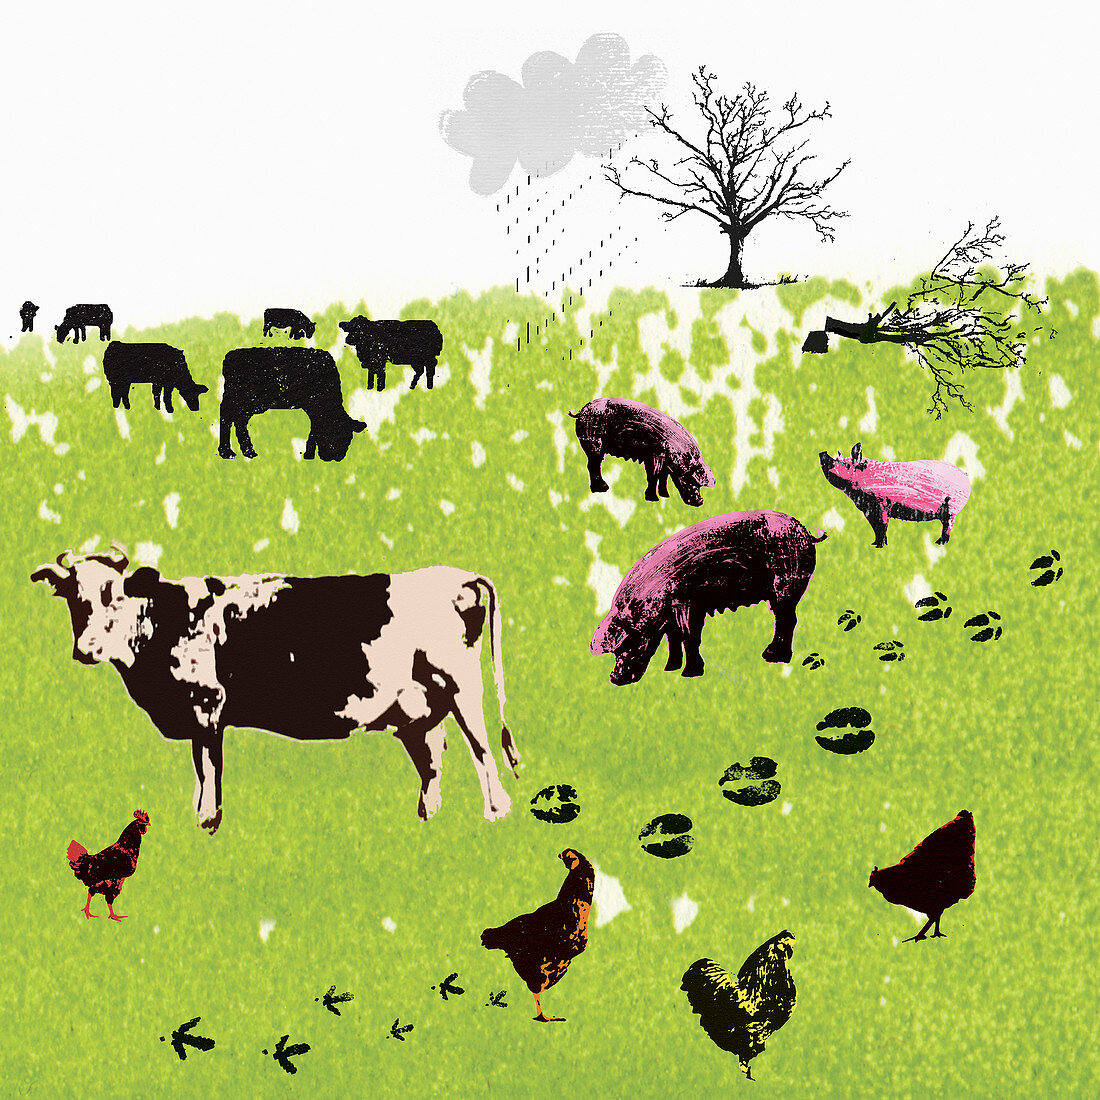 Carbon footprints of farm animals in field, illustration